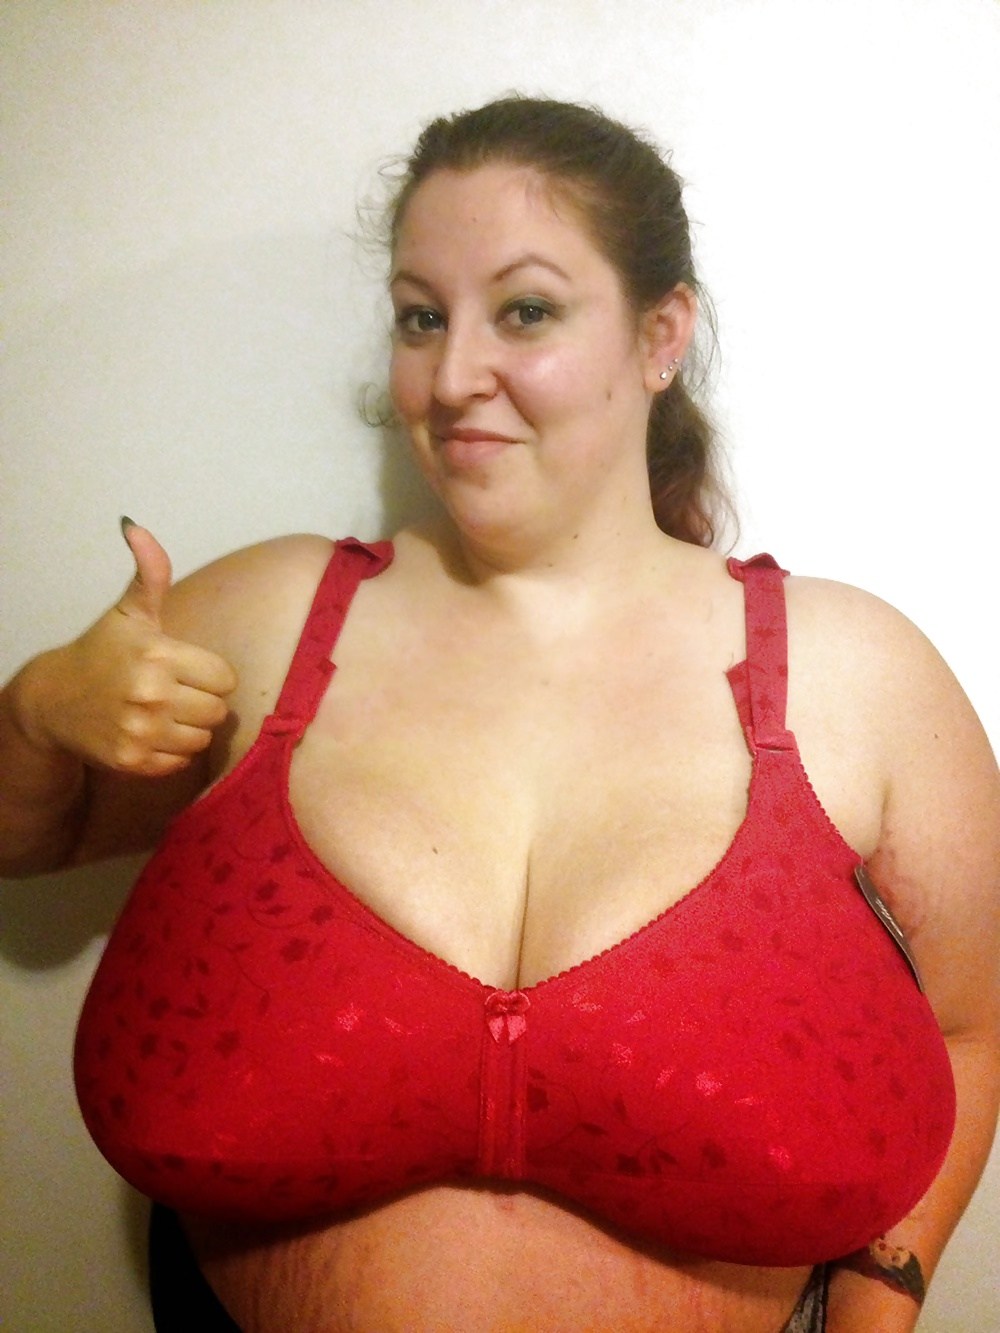 Huge Fat Boobs in a Bra (68 photos) - sex eporner pics